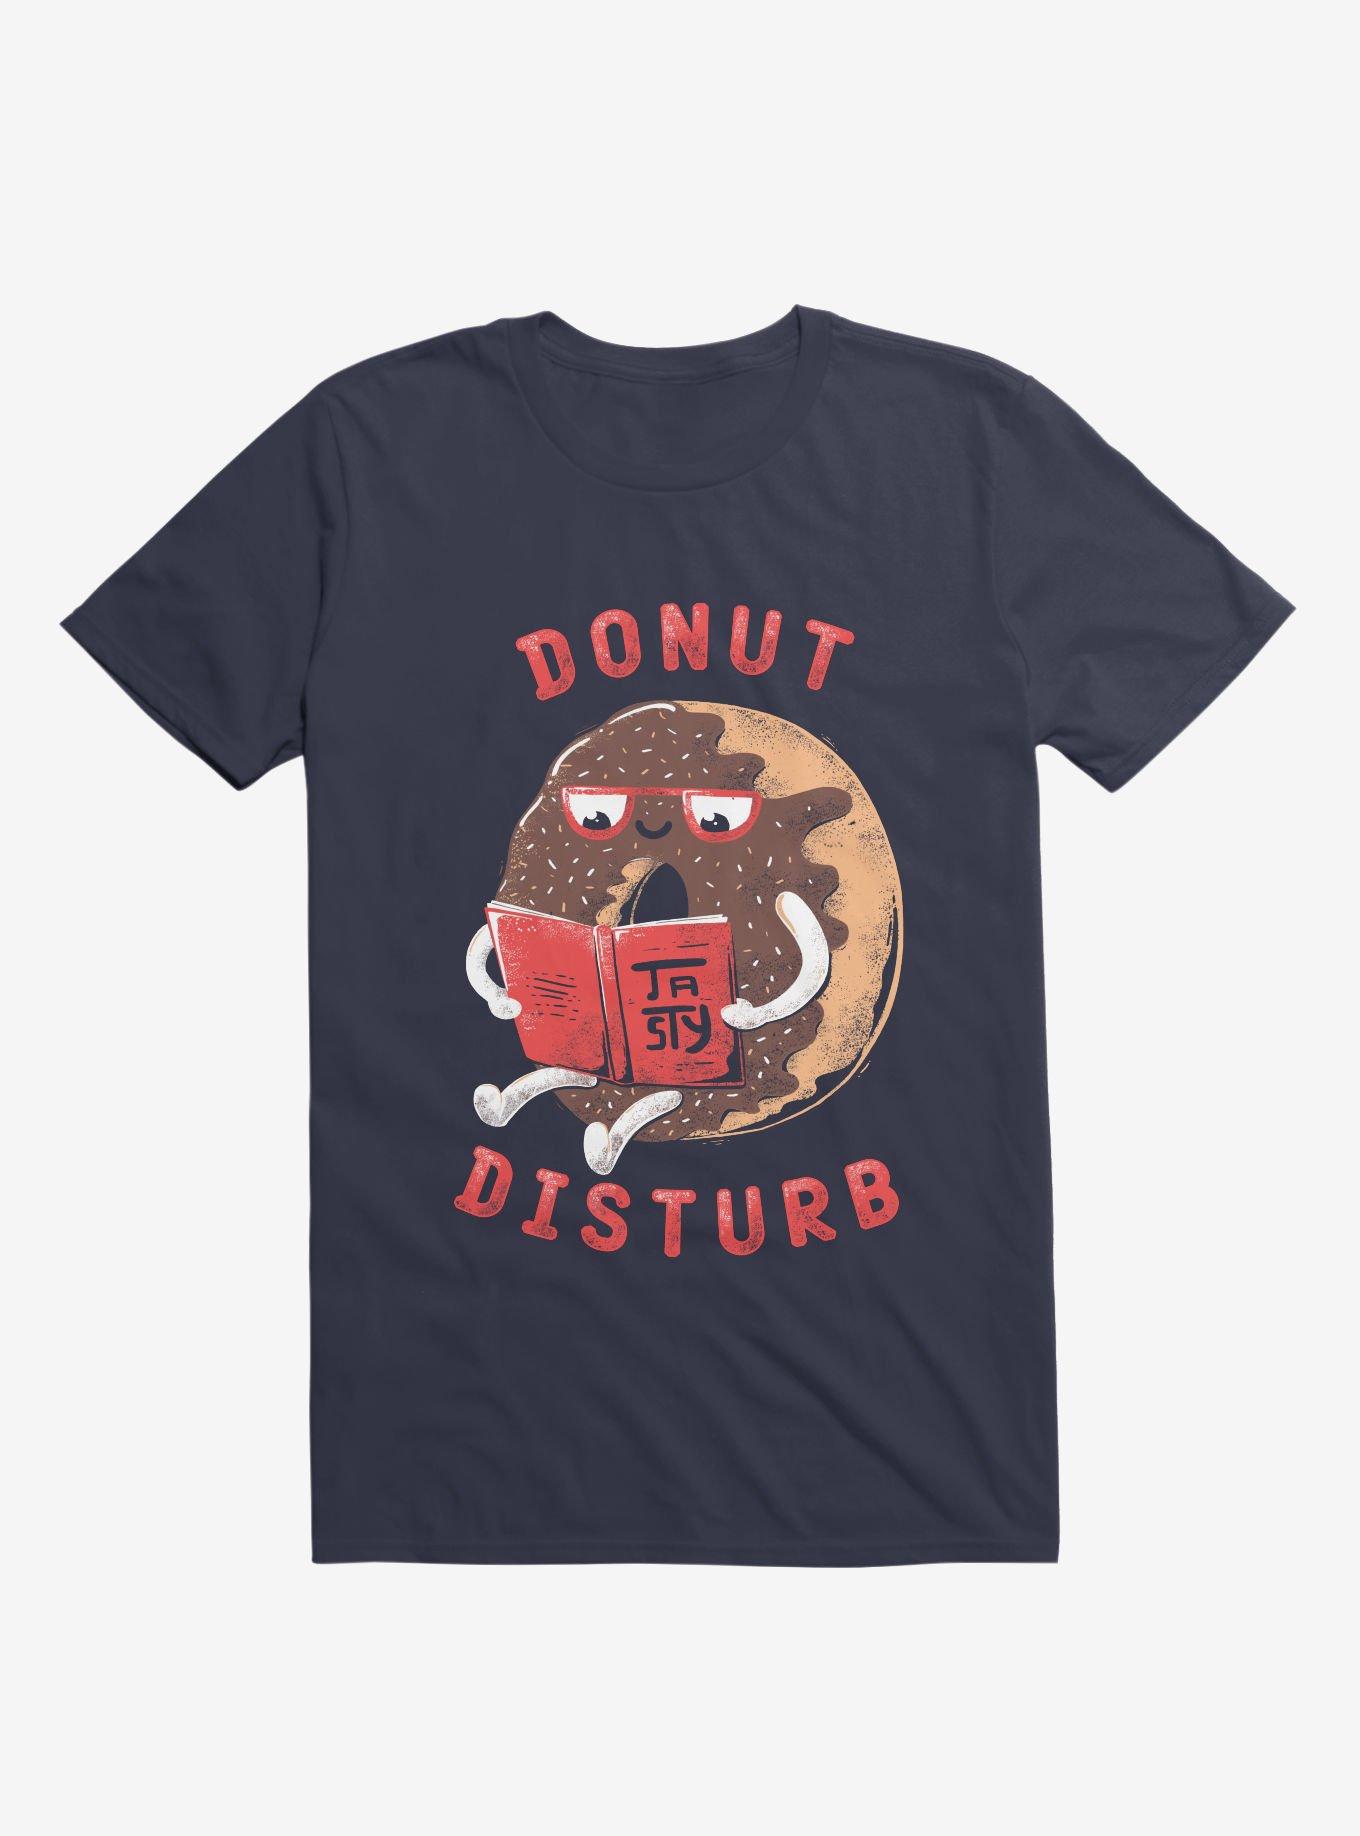 Donut Disturb Navy Blue T-Shirt